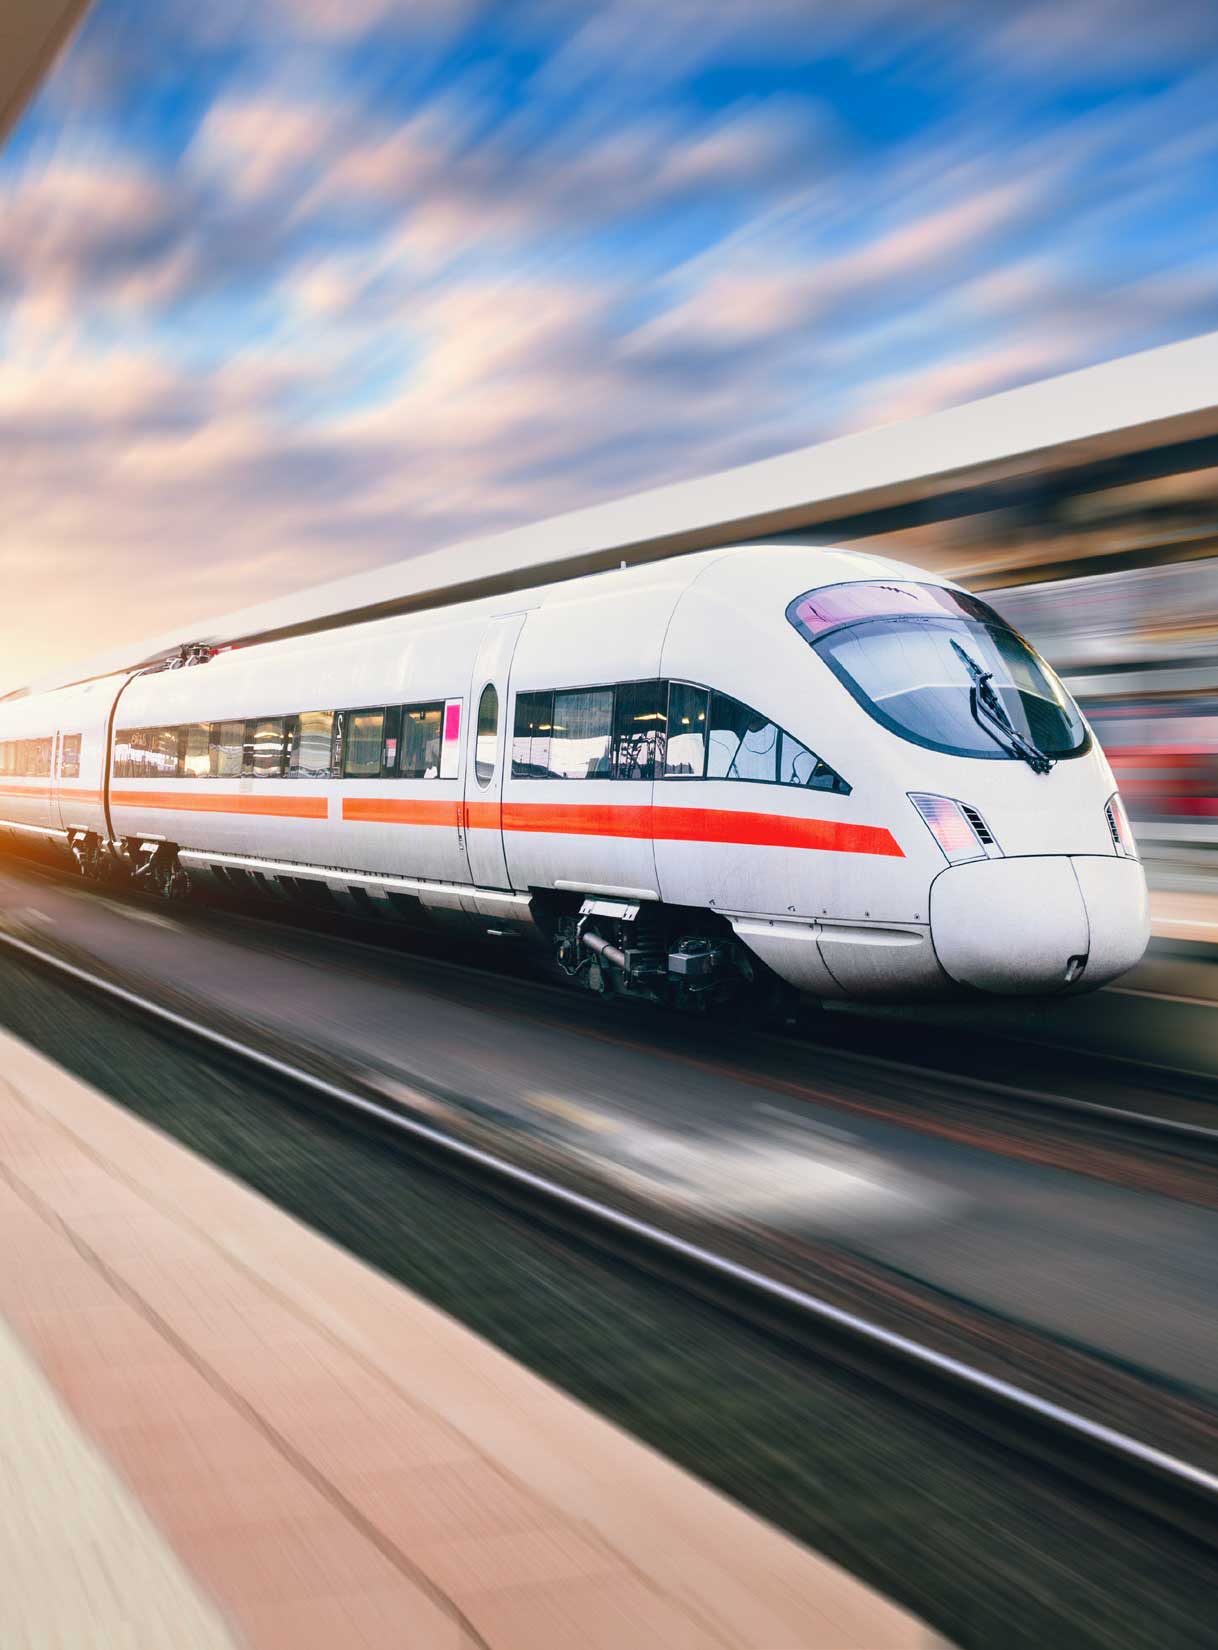 Digital Operations Analytics Enables Predictive Maintenance for a Major Railroad Company